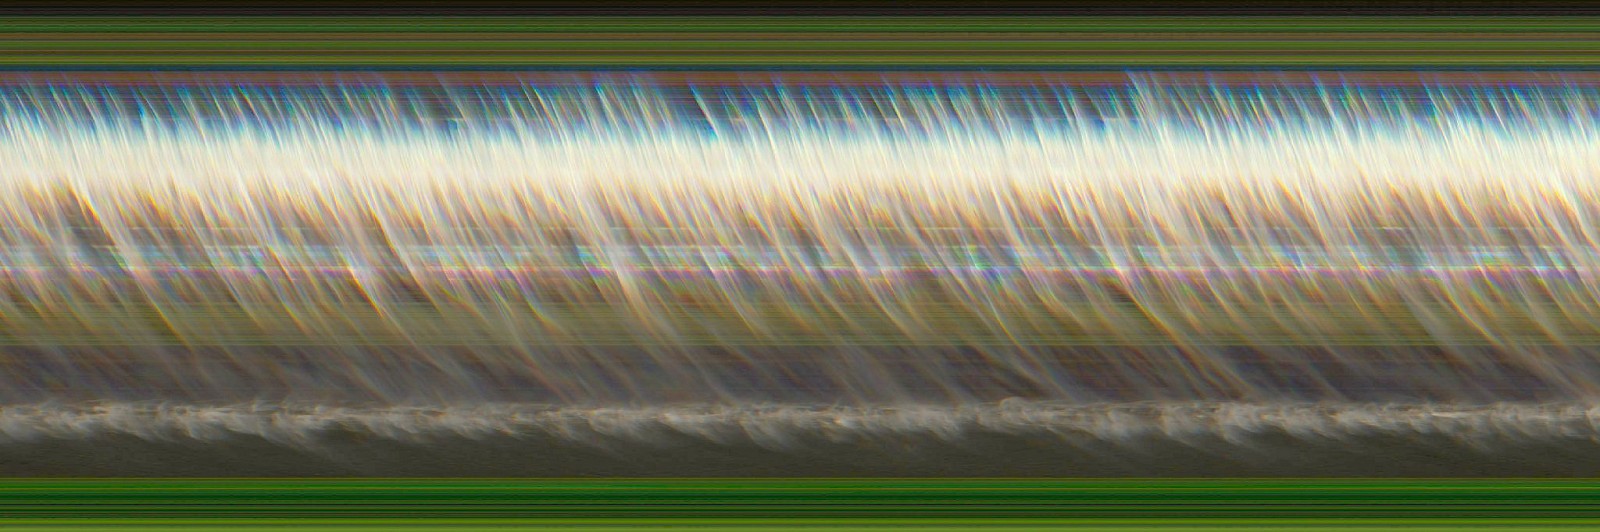 Jay Mark Johnson, AKAKA KASKATA 15, 2010 Akaka Falls HI
archival pigment on paper, mounted on aluminum, 40 x 120 in. (101.6 x 304.8 cm)